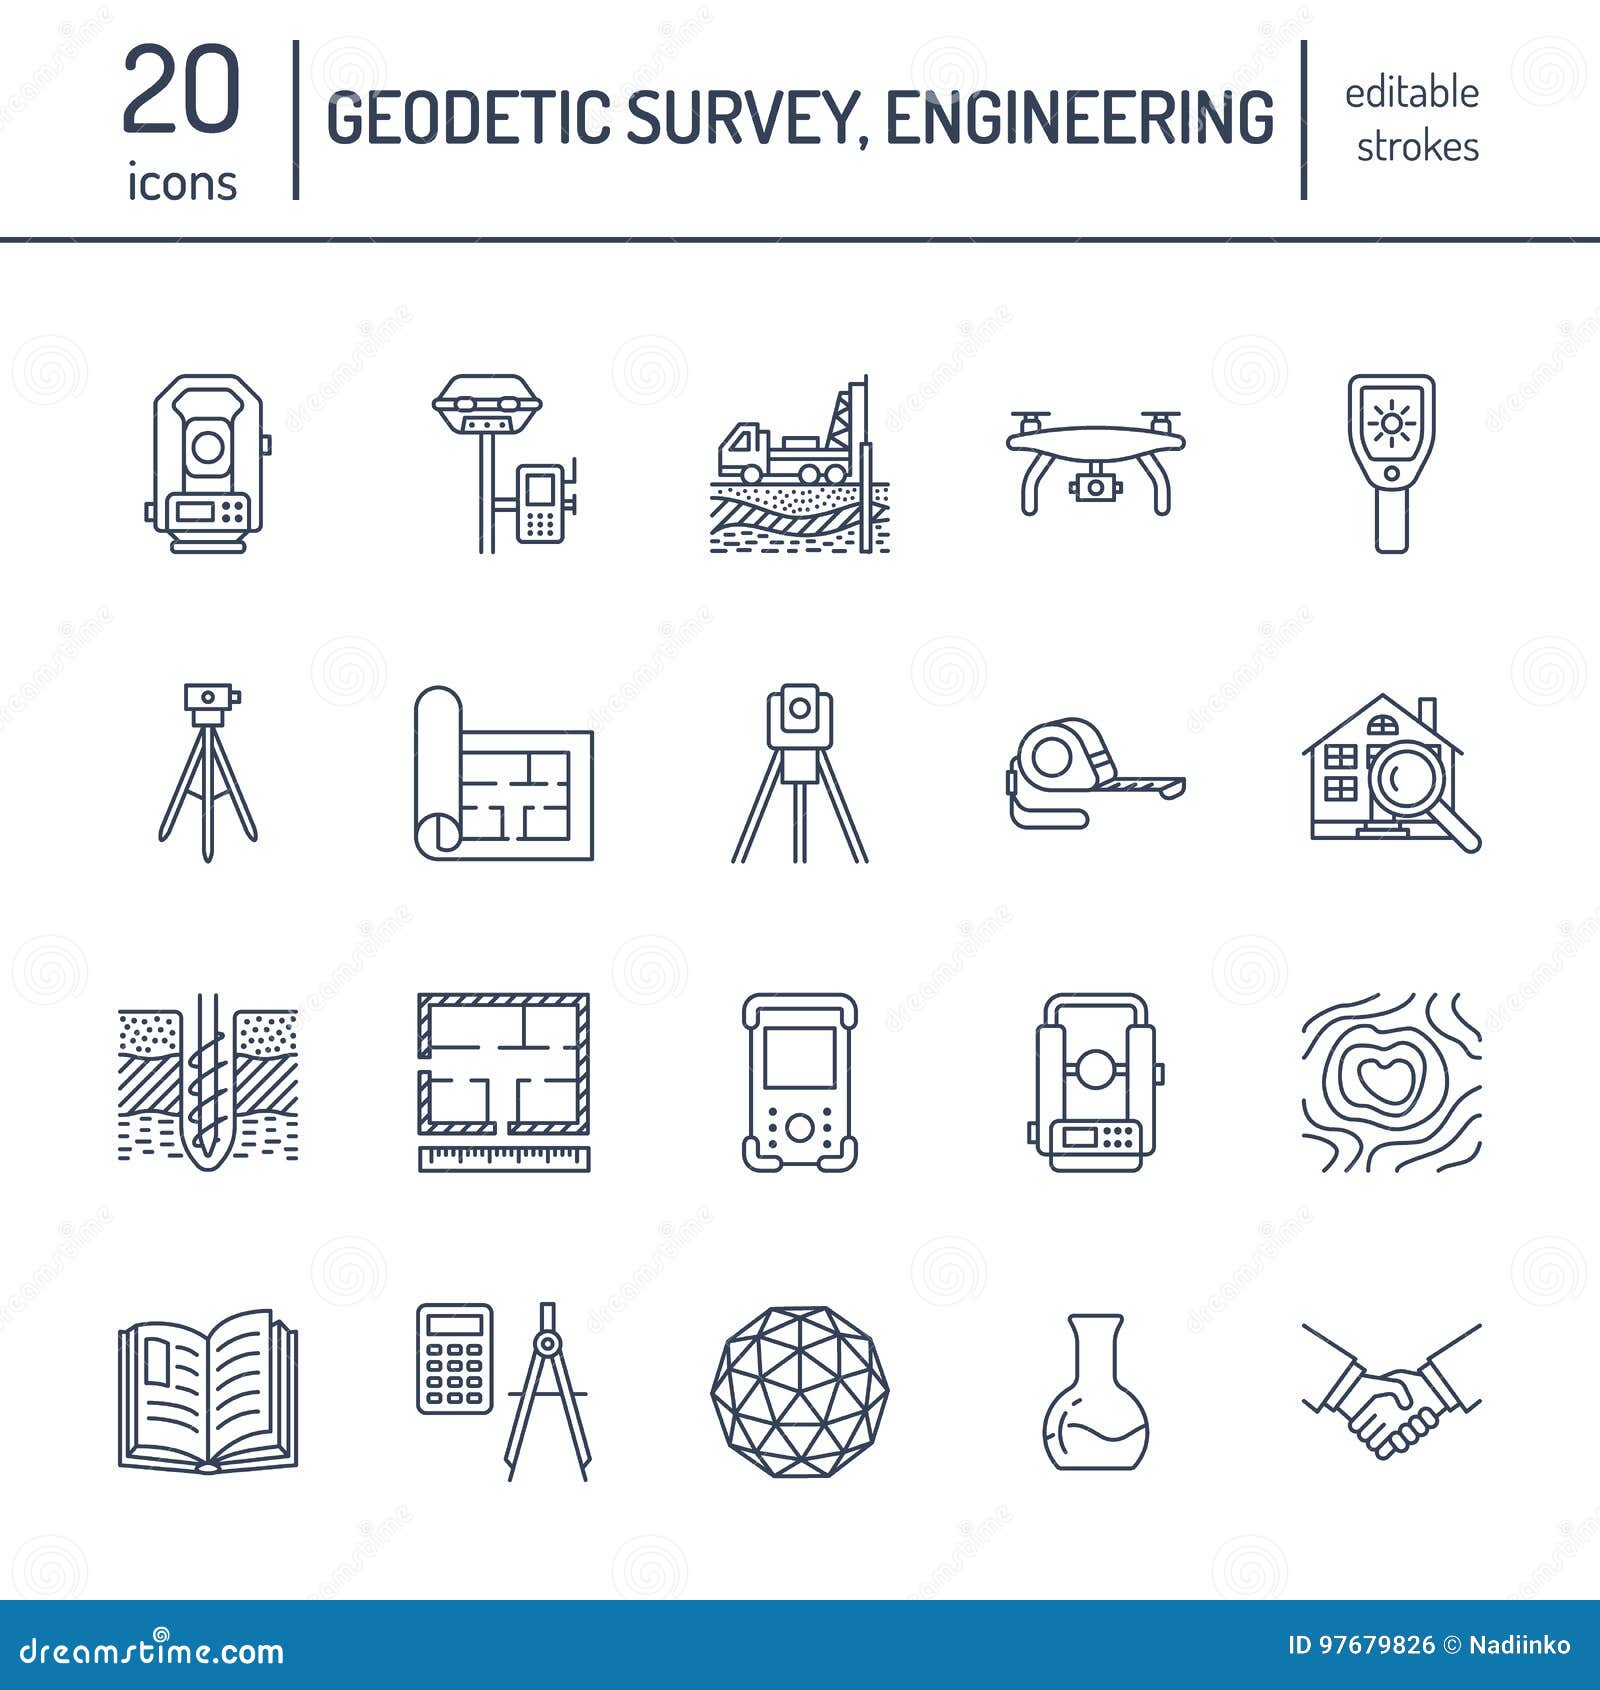 geodetic survey engineering  flat line icons. geodesy equipment, tacheometer, theodolite, tripod. geological